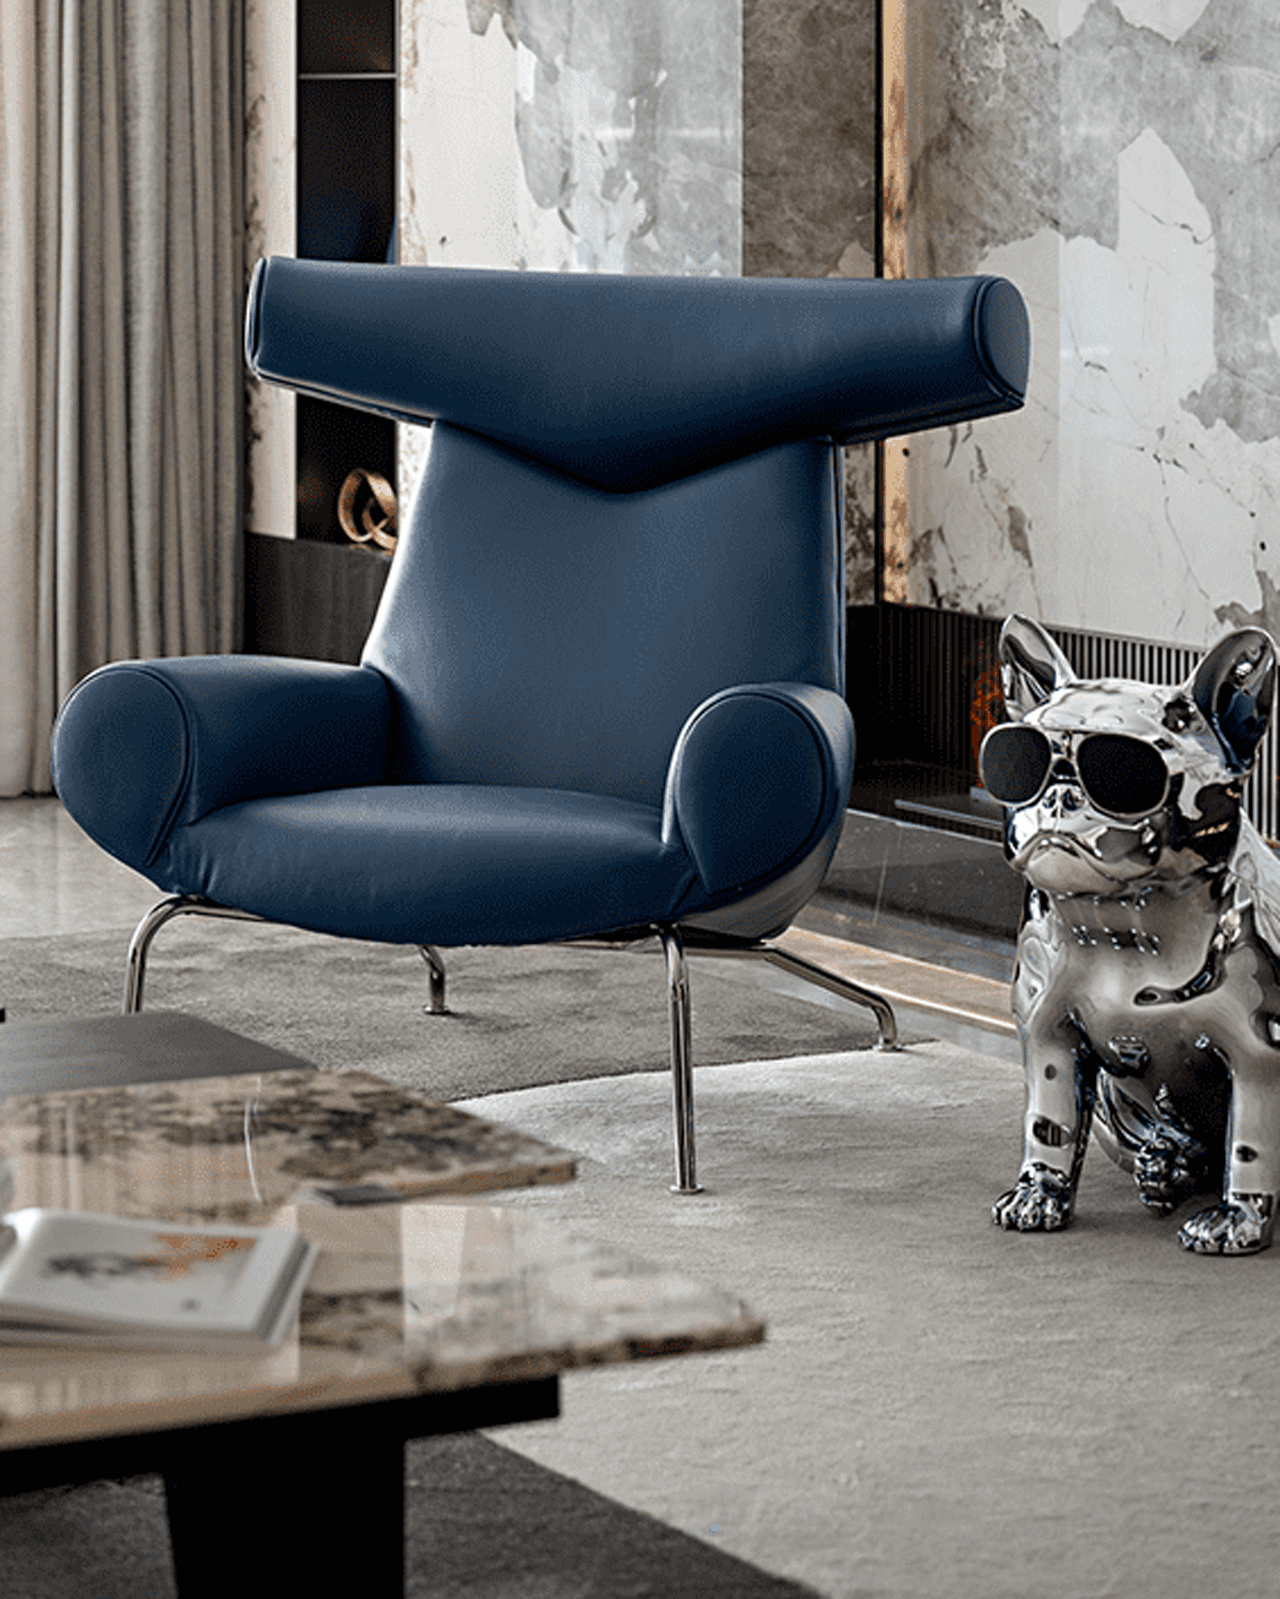 Enhance Modern Home Design with a Blue Leather Armchair